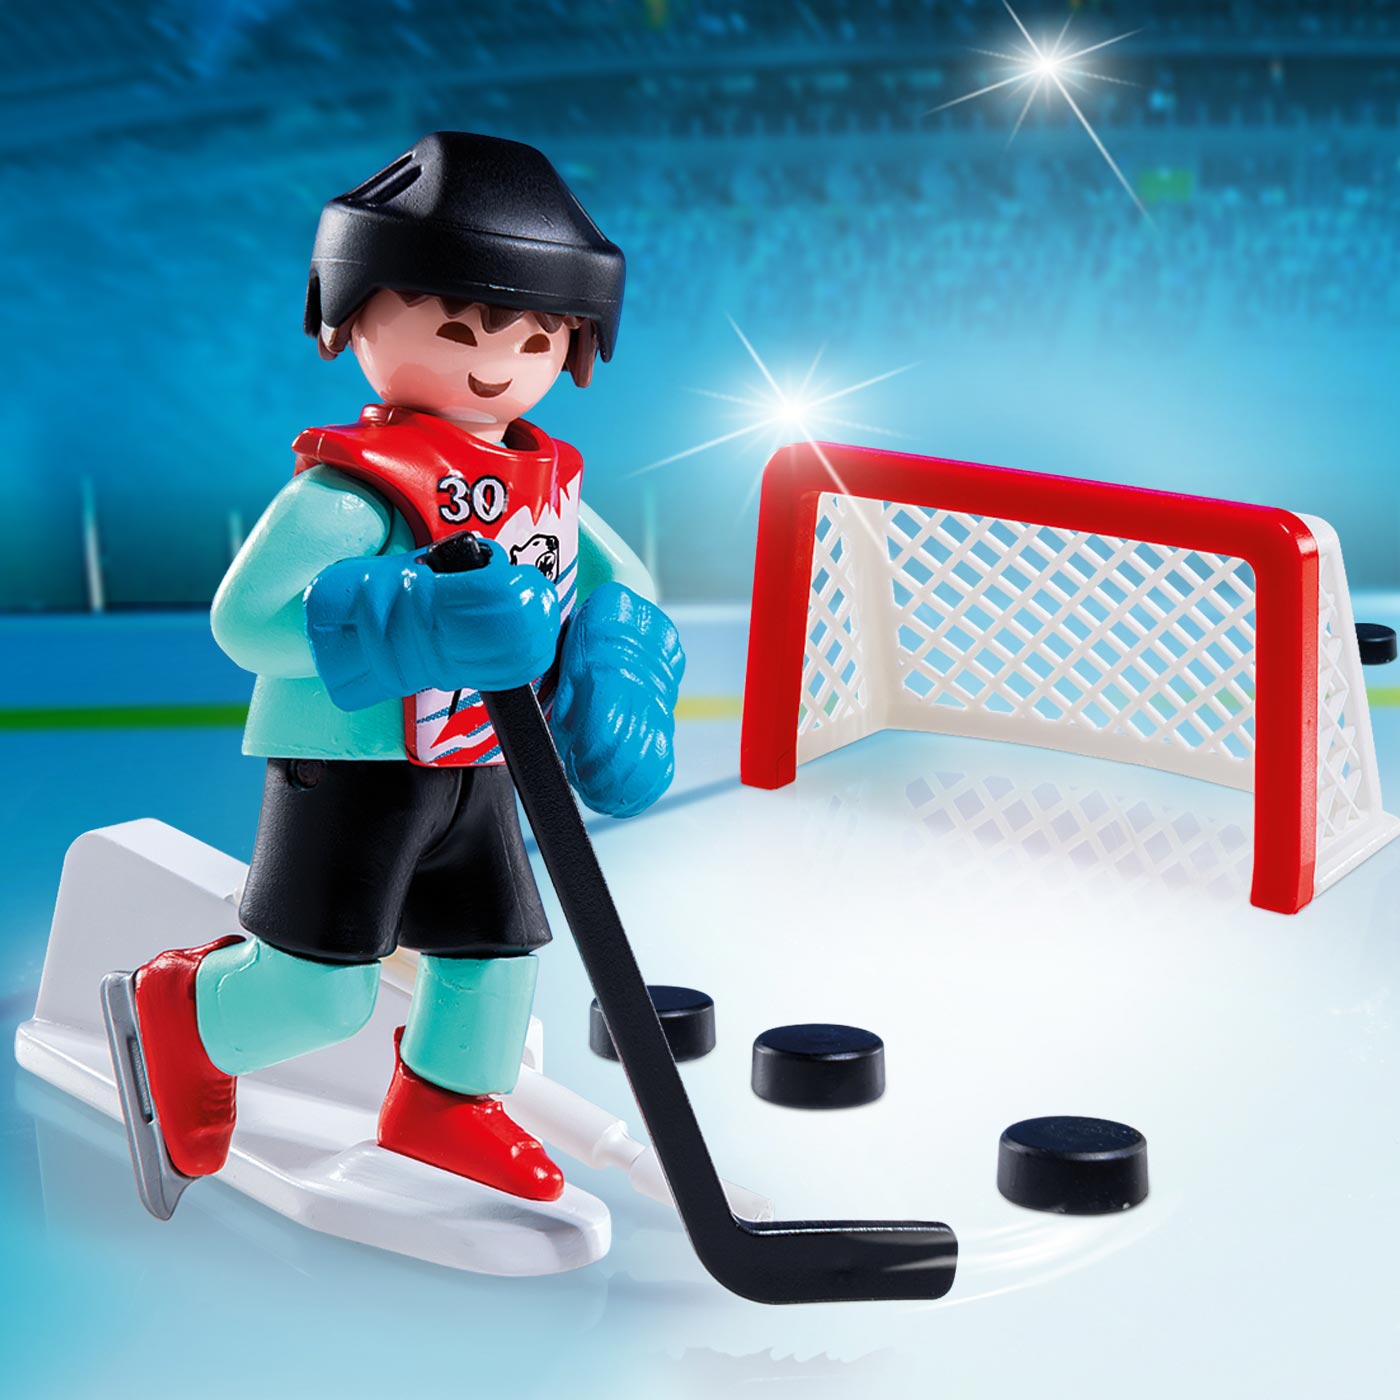 Playmobil 5383 IJshockeyspeler